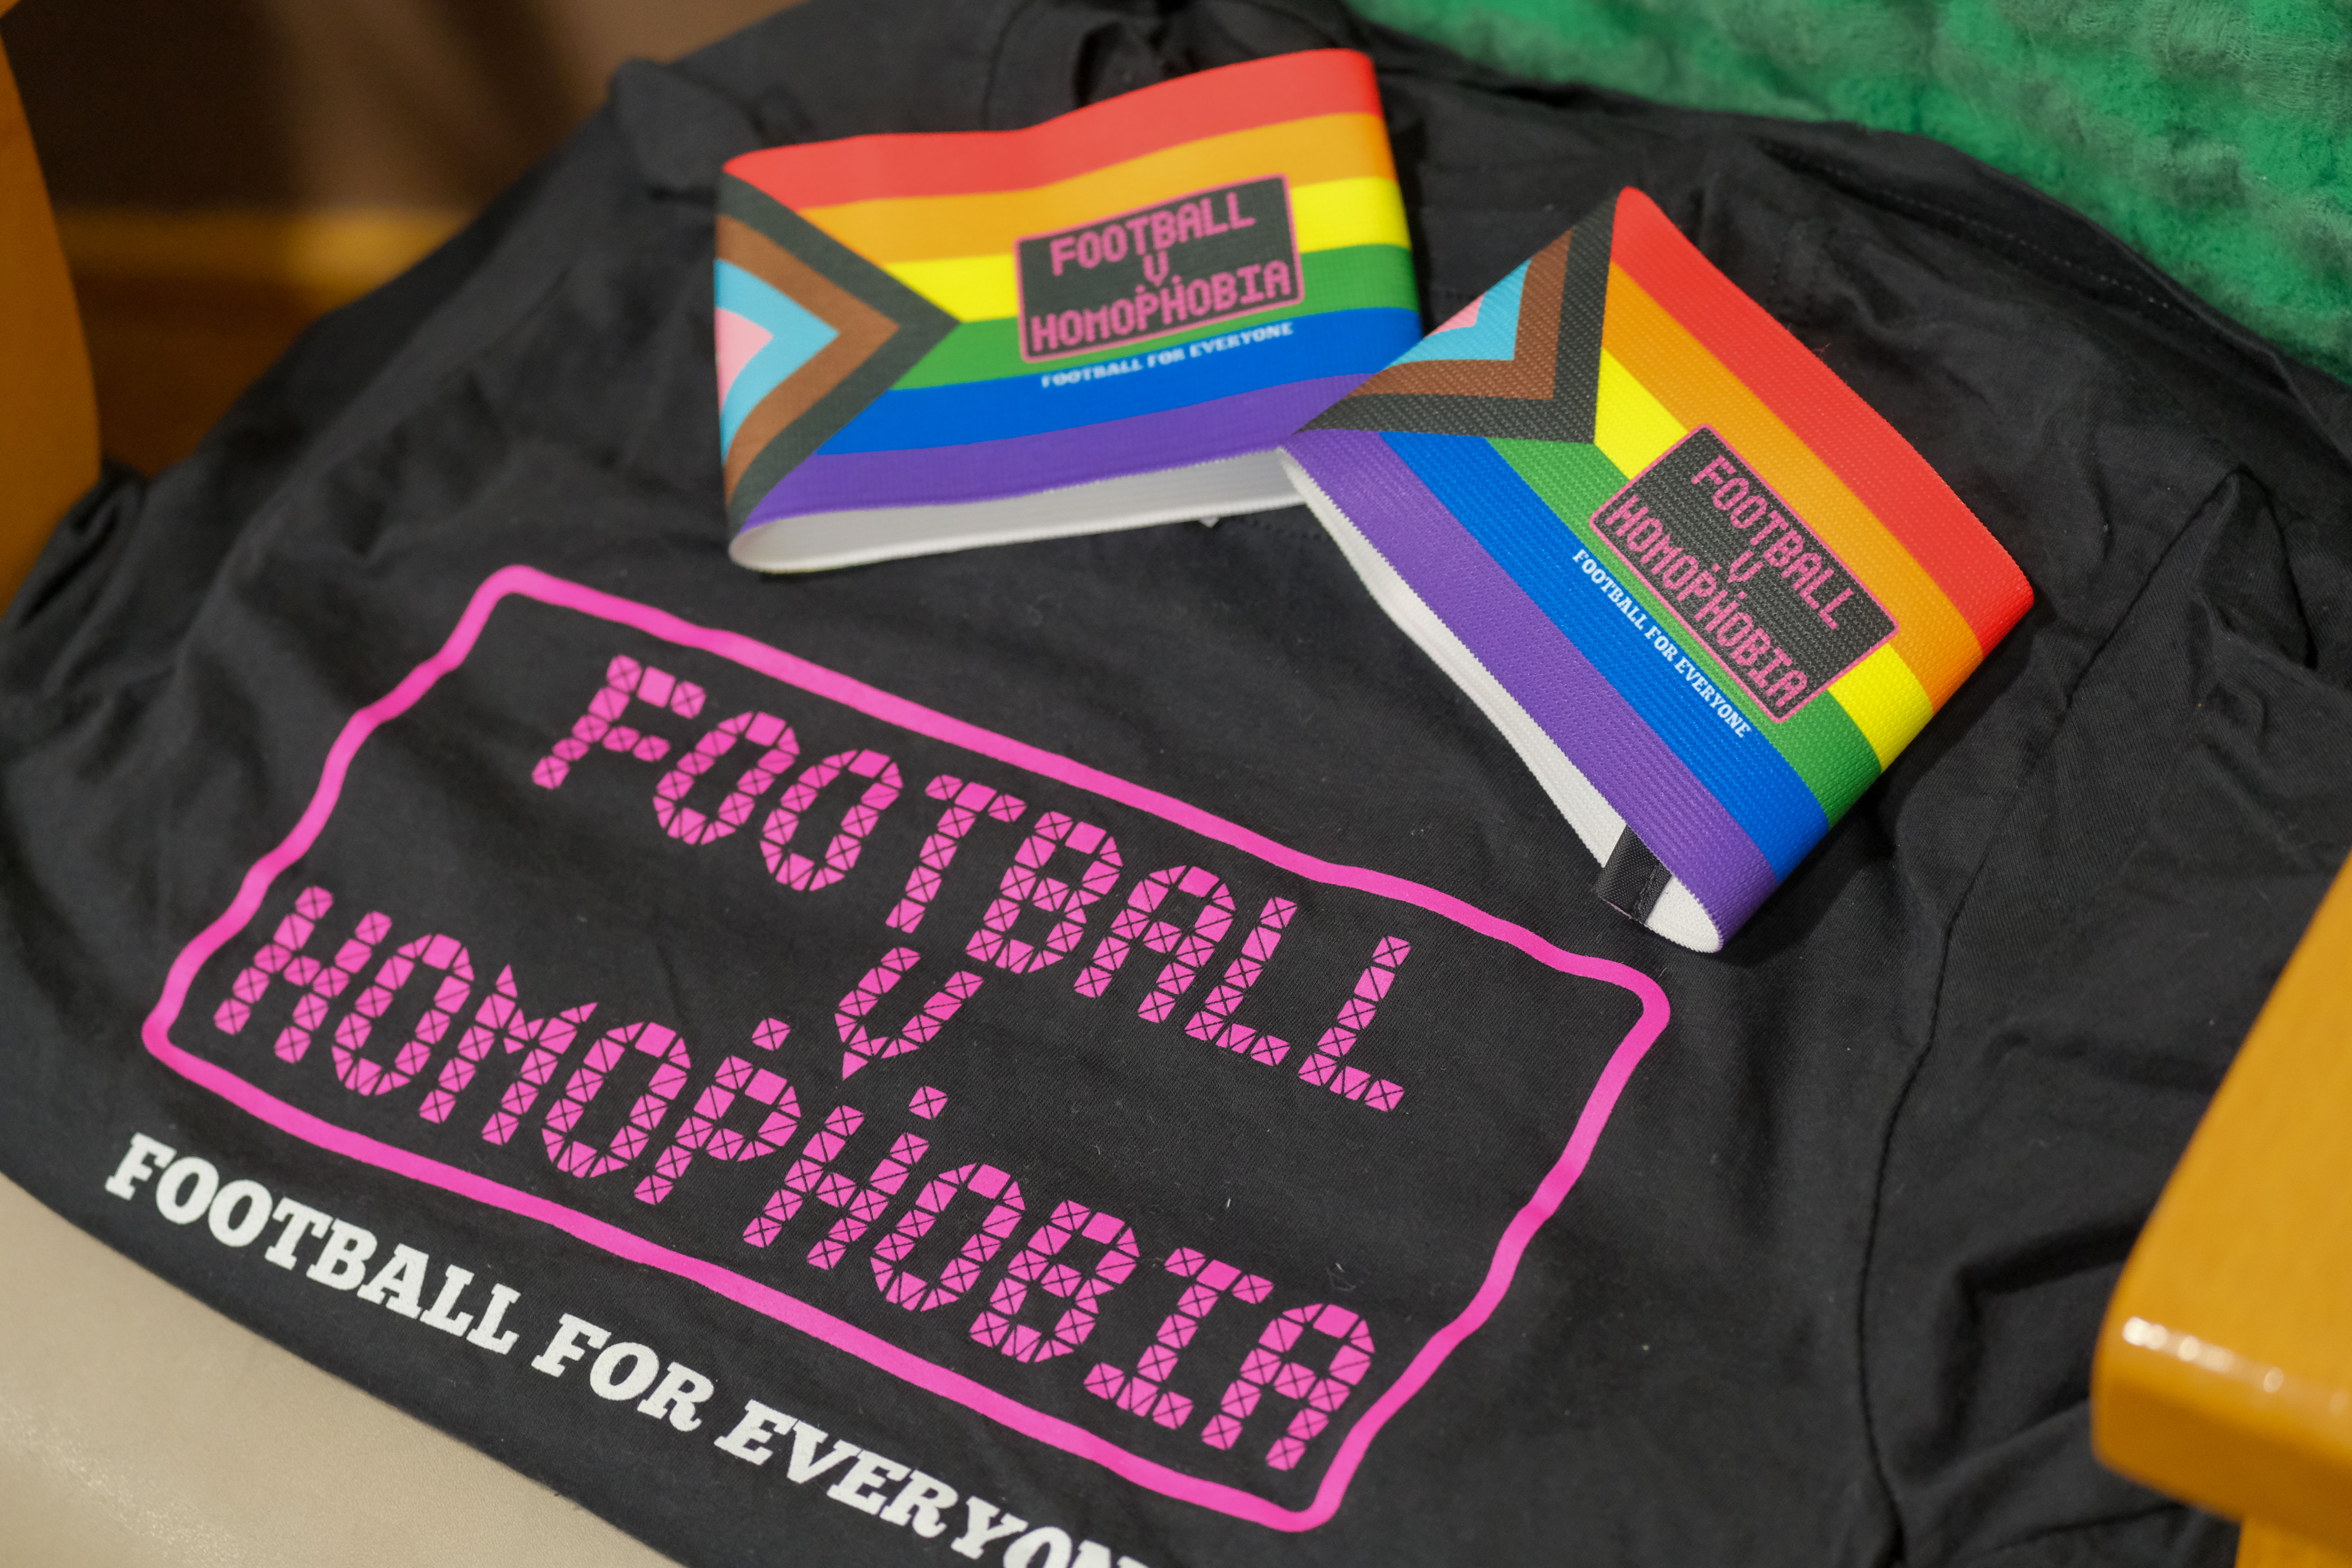 Football v Homophobia branded t-shirt and rainbow armband